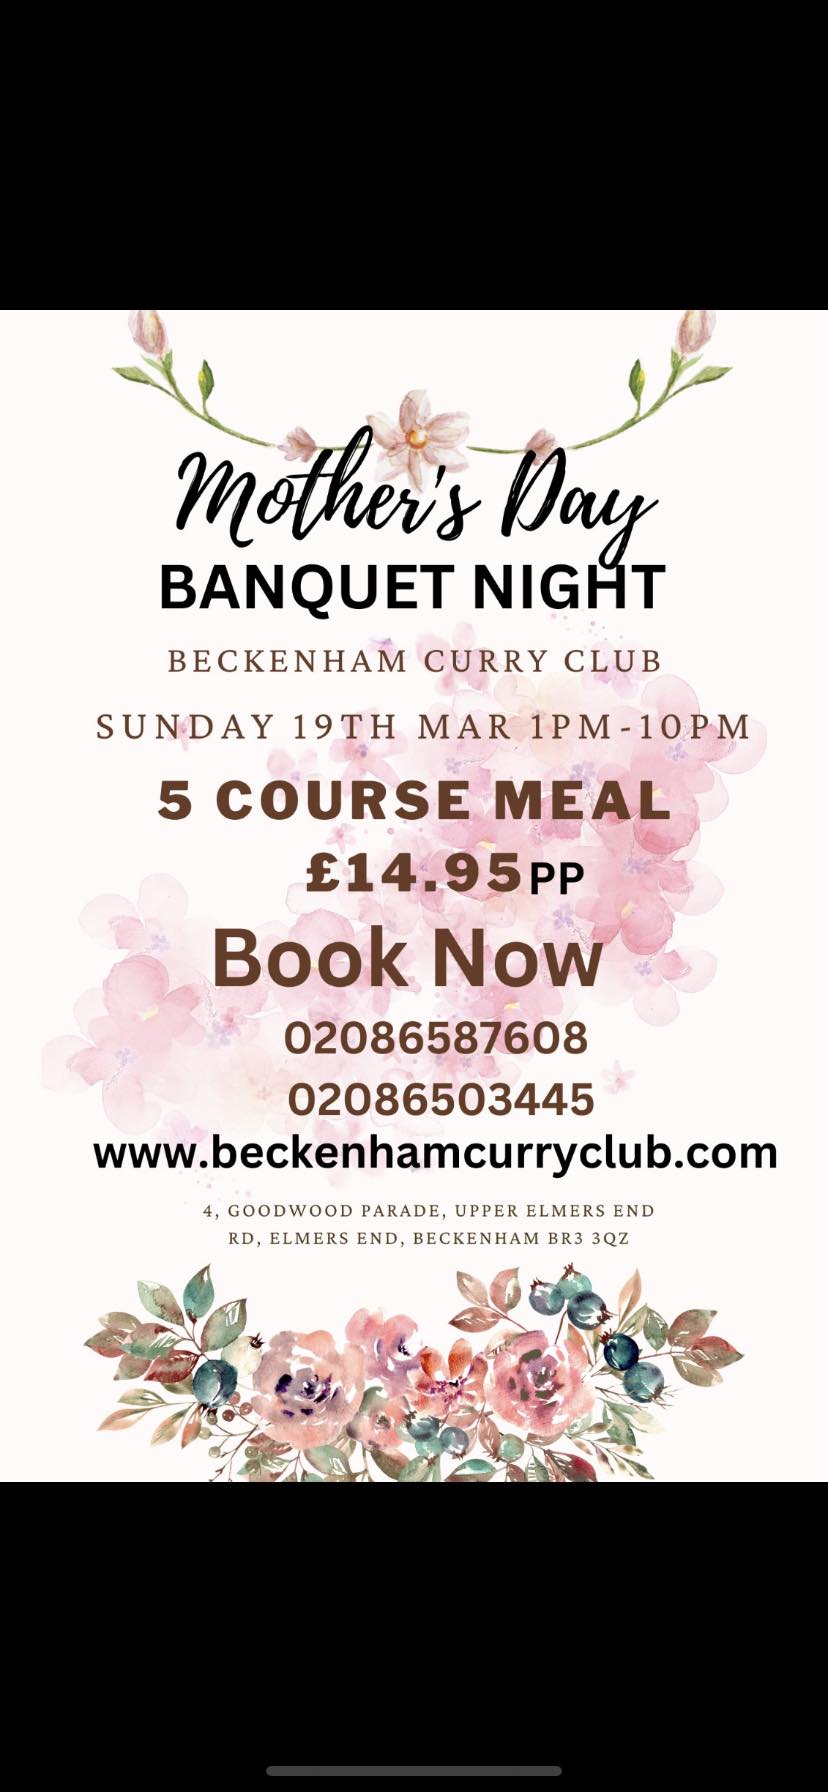 Beckenham Curry Club